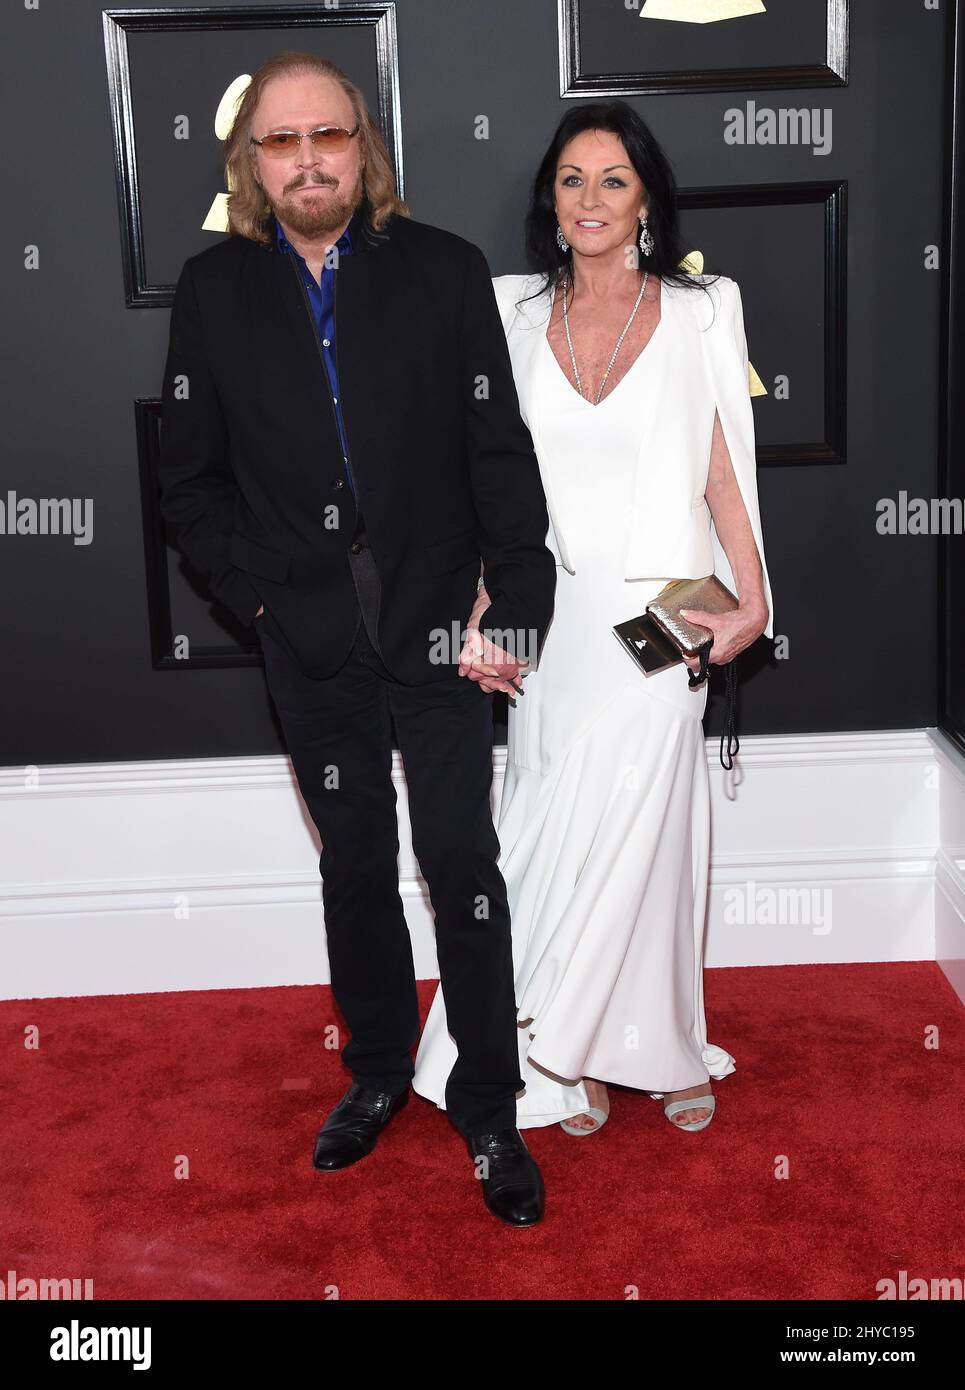 Barry Gib partecipa ai Grammy Awards 59th di Los Angeles Foto Stock